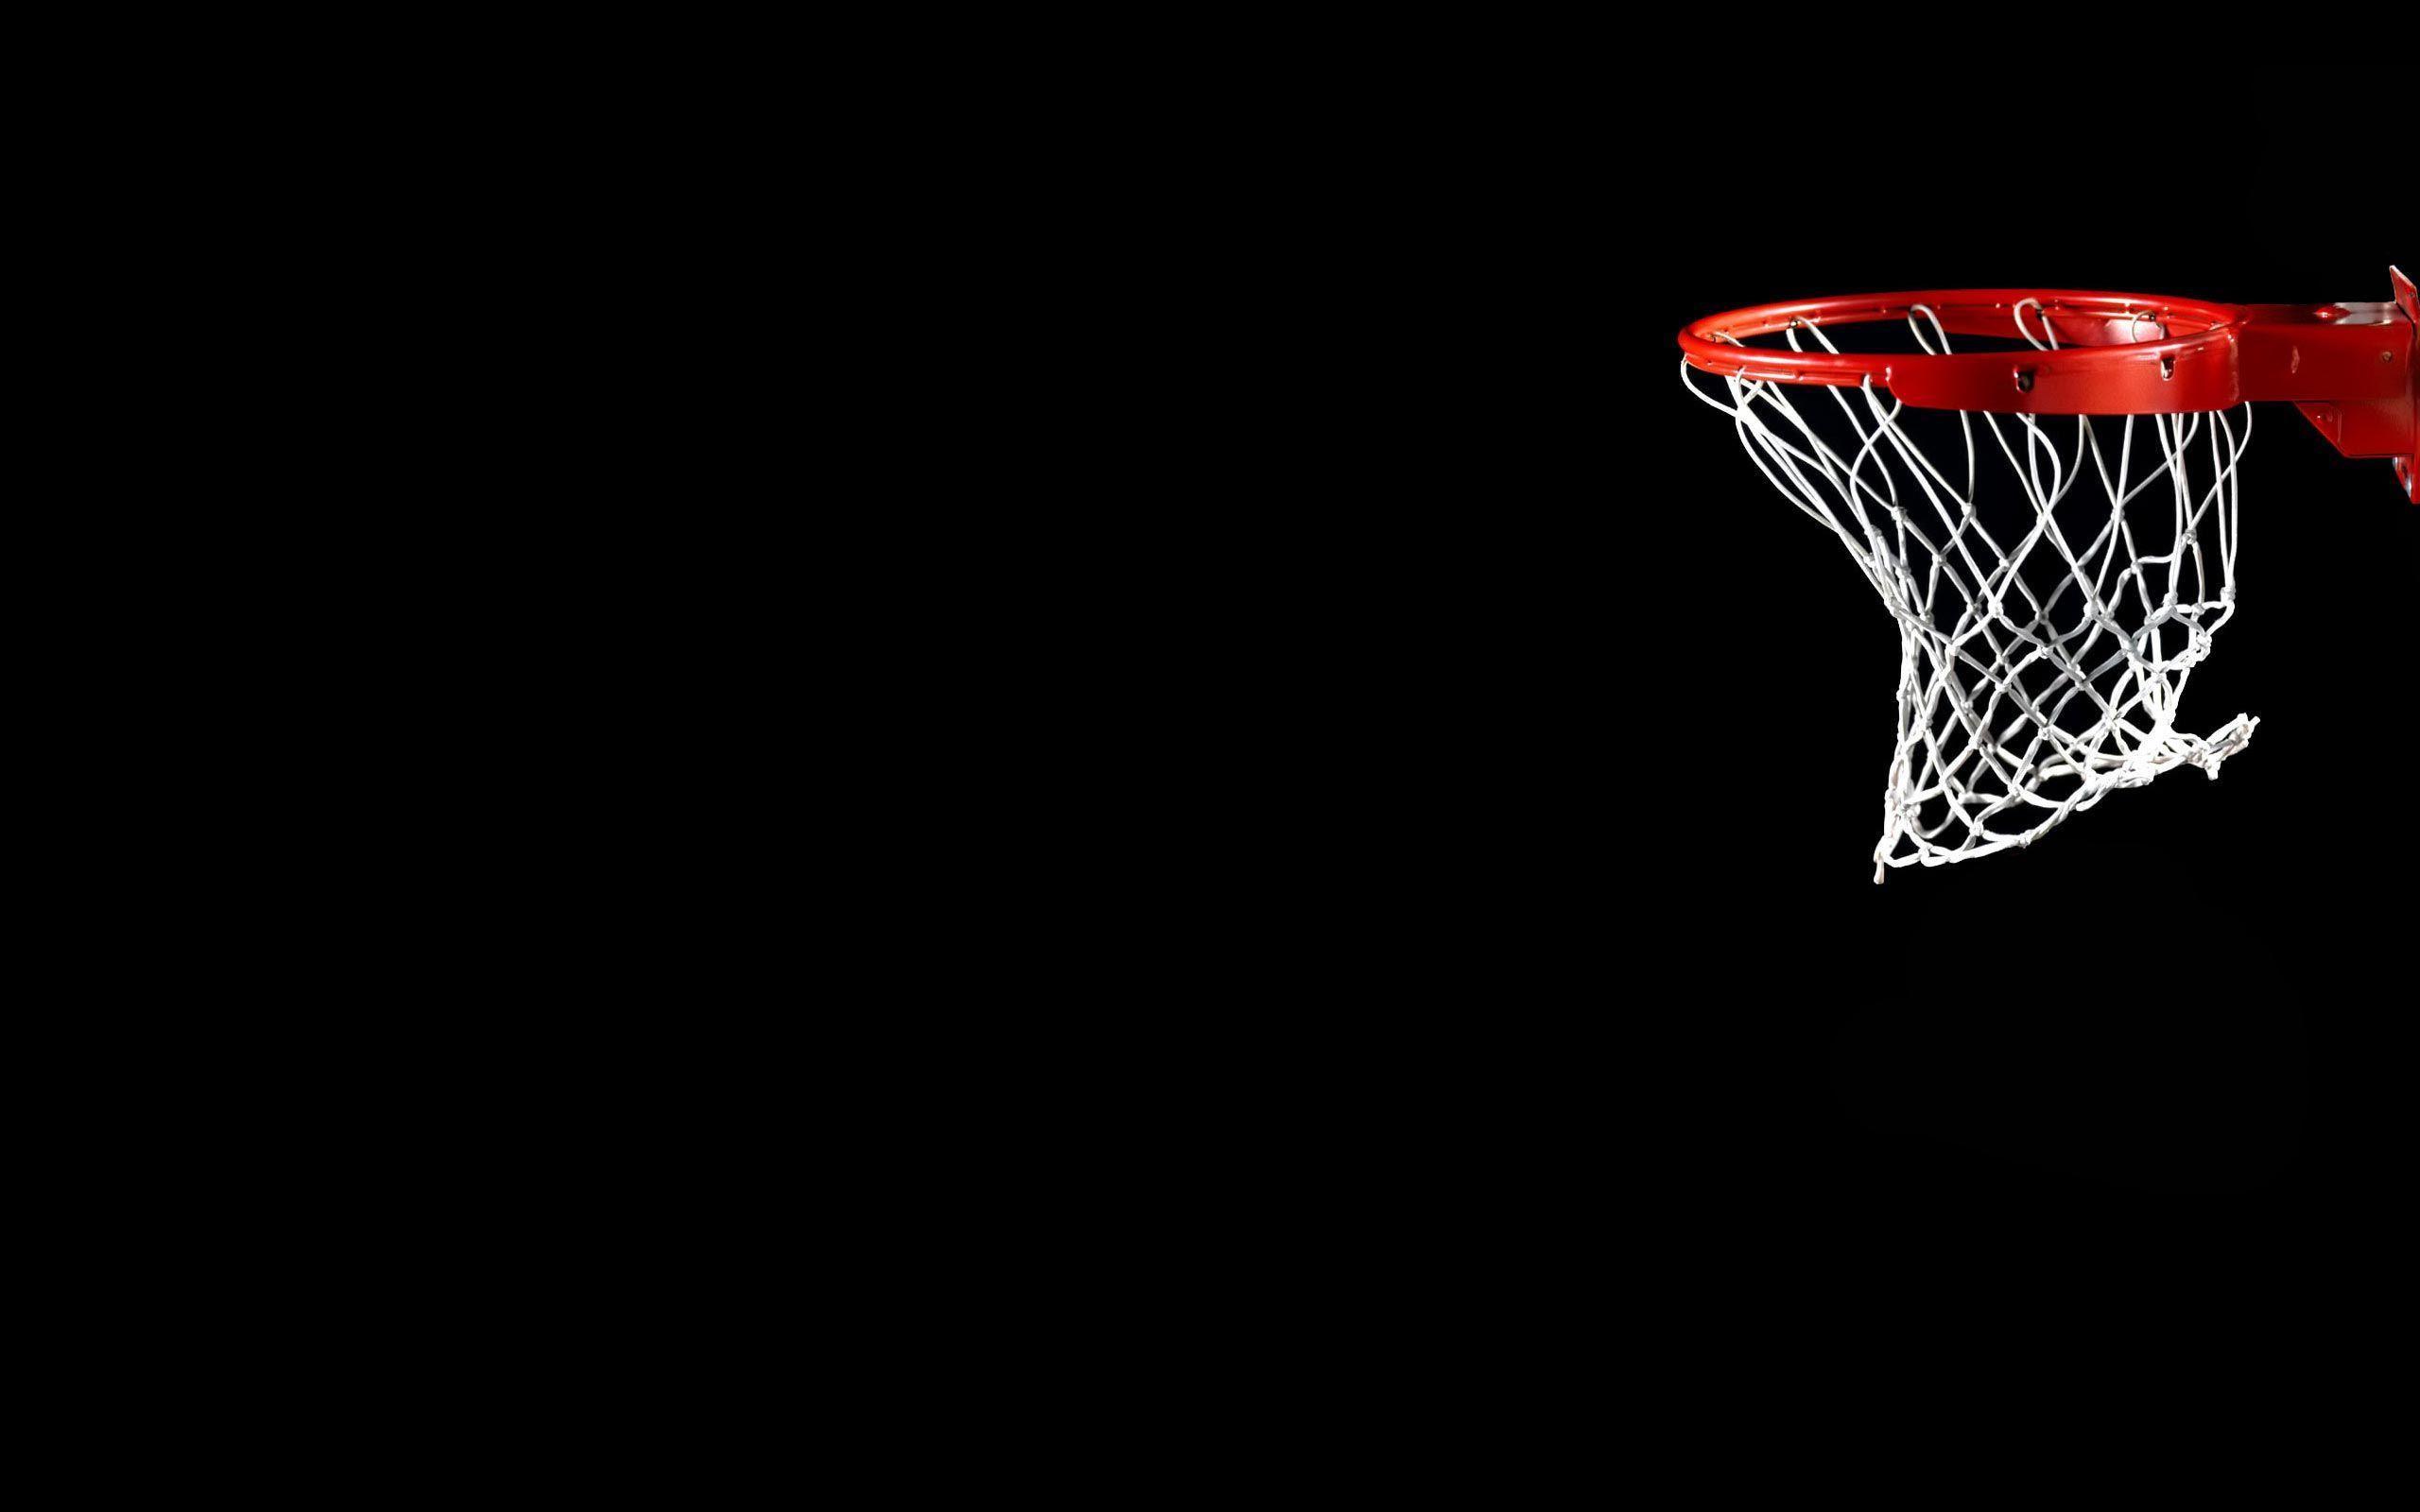 Basketball Image, Background, Basketball, Black, Hd, Sports